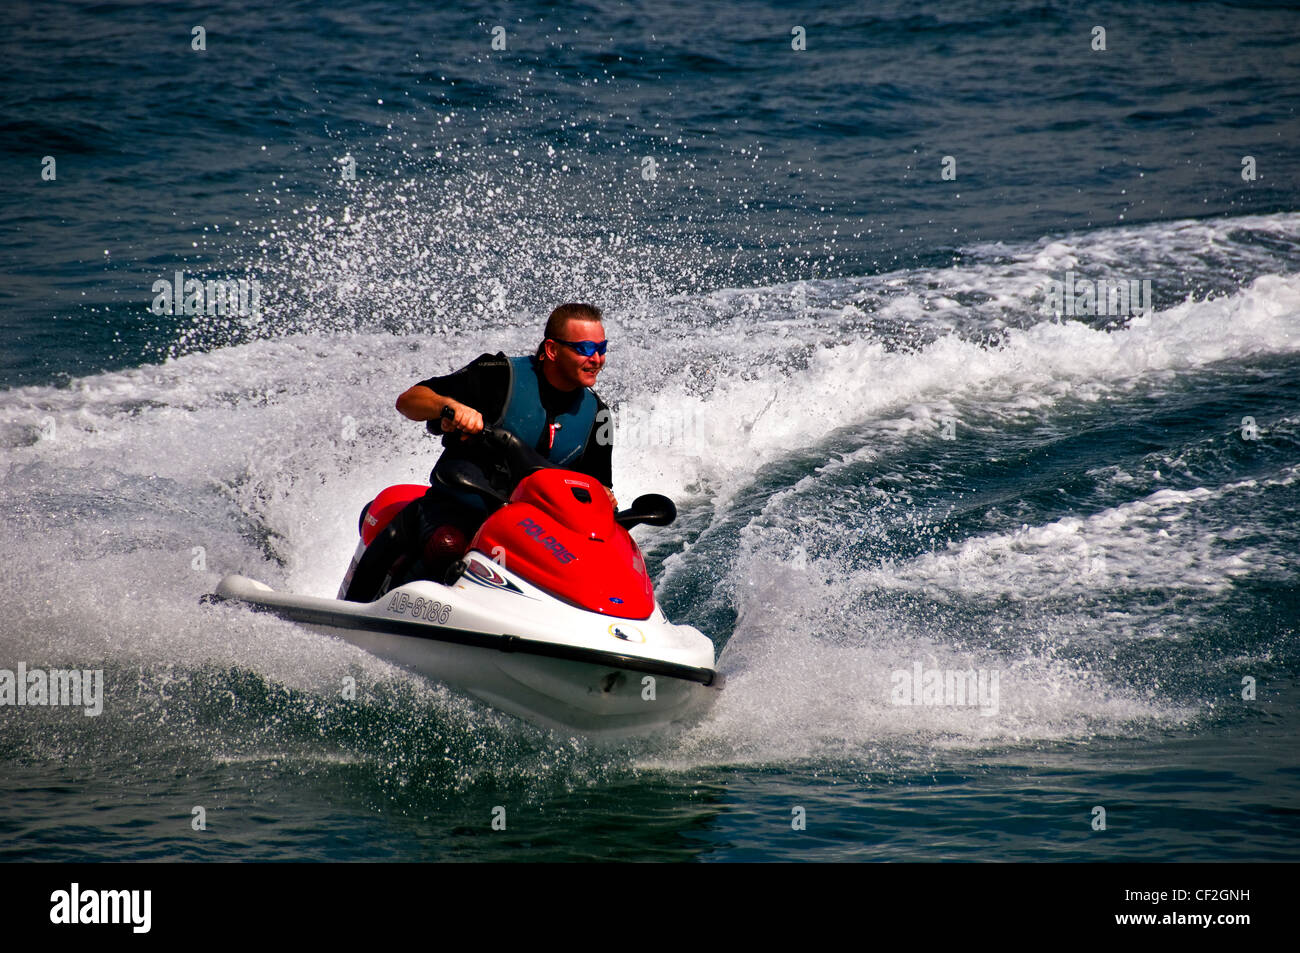 A man speeding through the water on a personal watercraft (PWC). Stock Photo